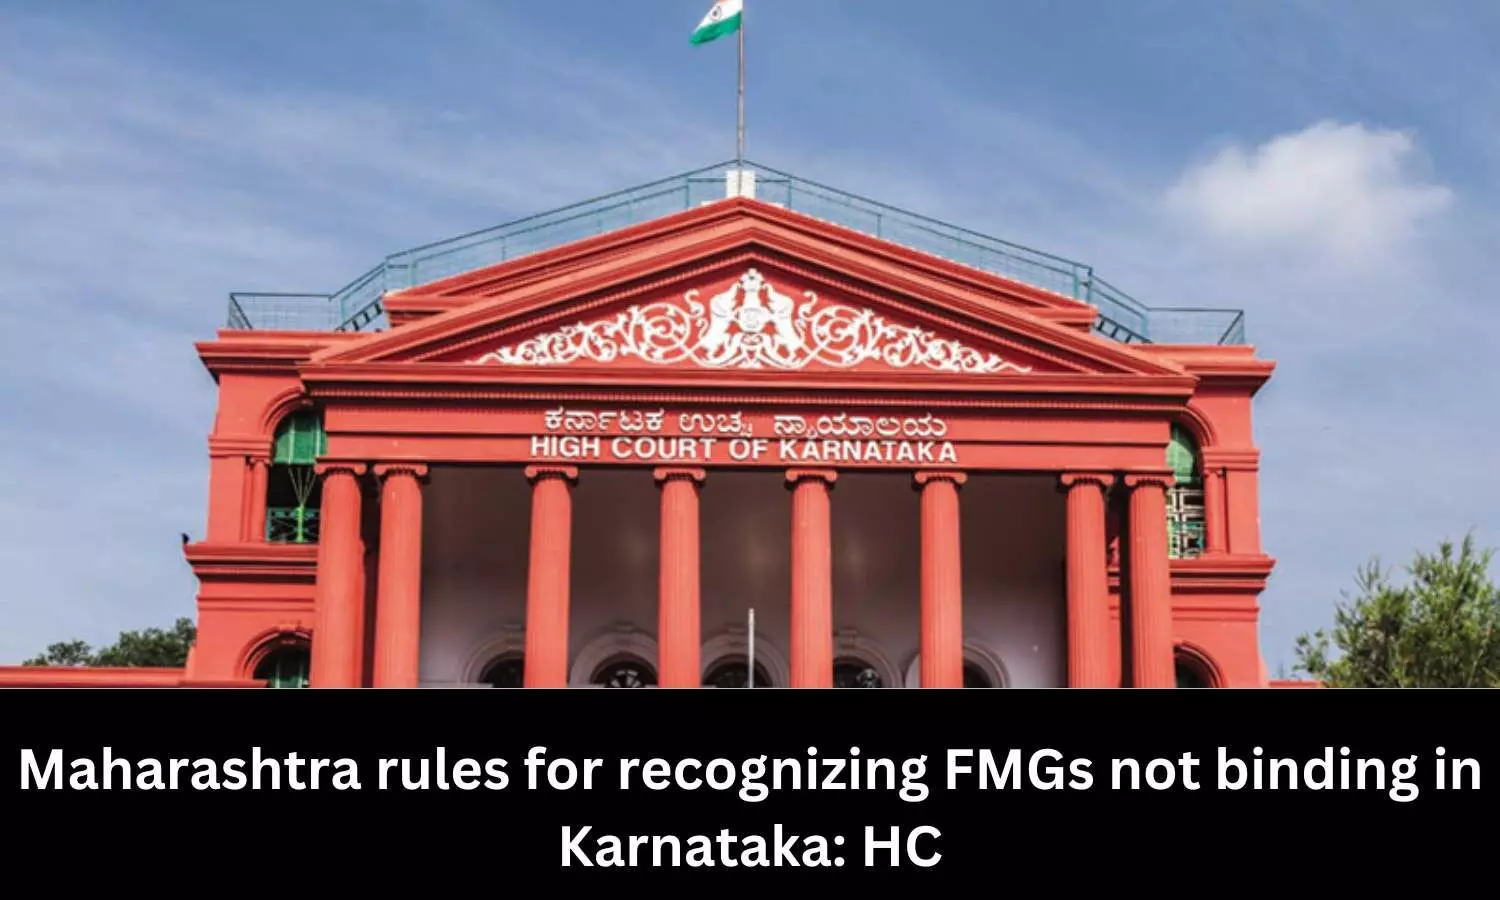 Maharashtra rules for recognizing FMGs not binding in Karnataka: HC